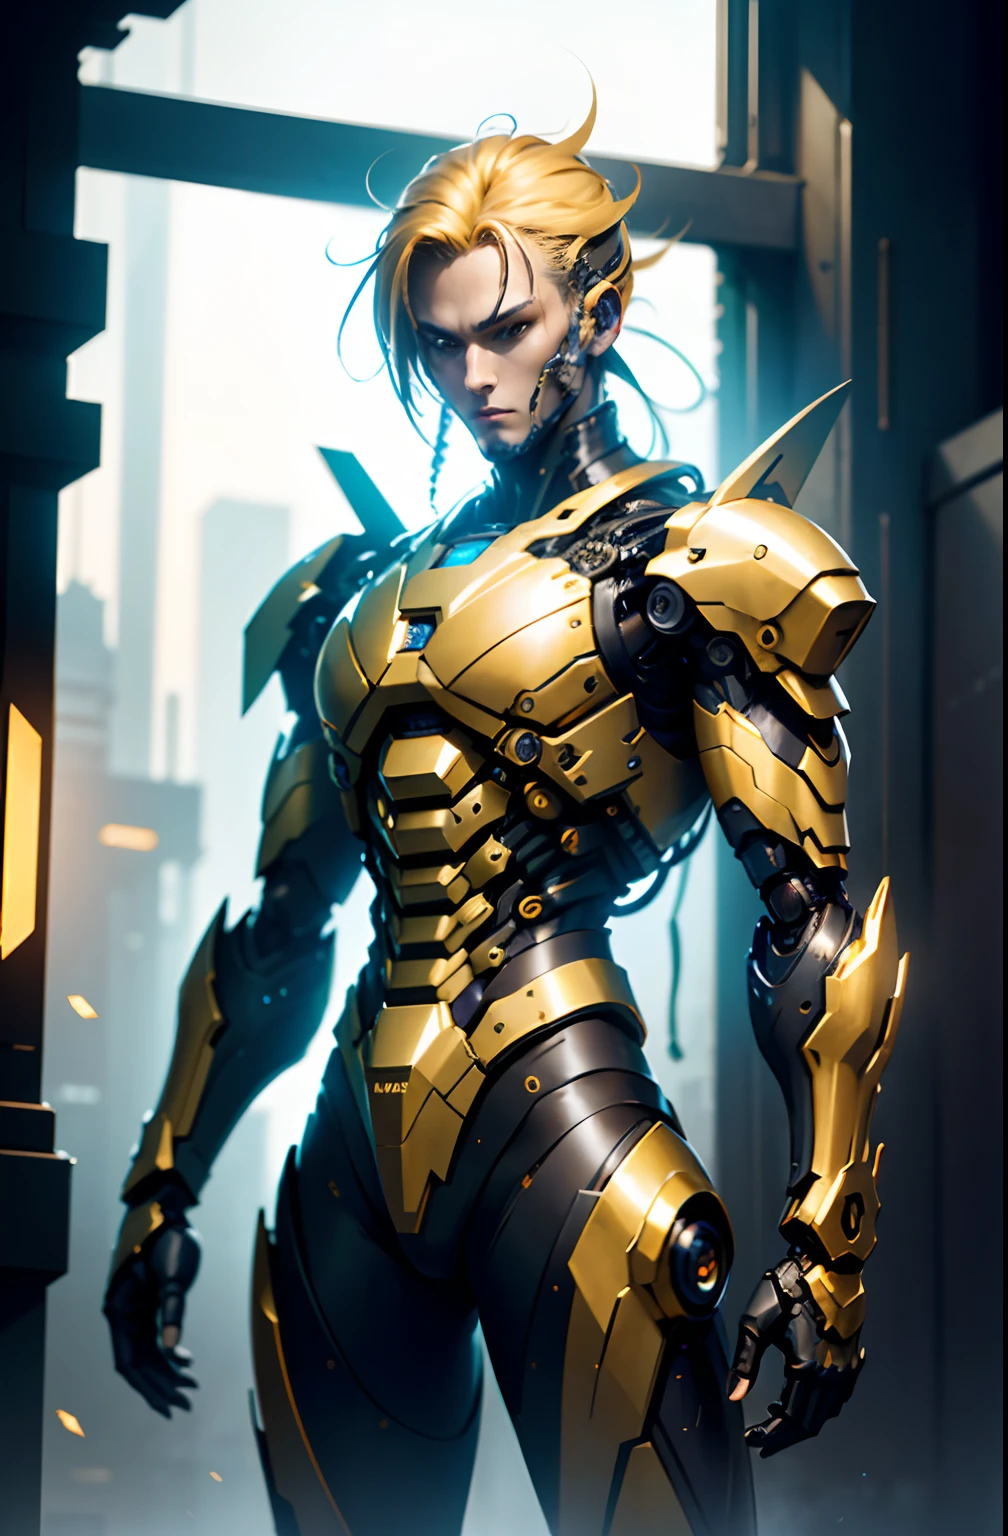 Dark_Fantasy、Golden hair color、cyberpunked、(Double Sword、Scorpion Cyborg Man、Das Veilchen:1.1)、1man、Mechanical technology、Robot Presence、Ninja-like fighting stance、Cybernetic Guardian、